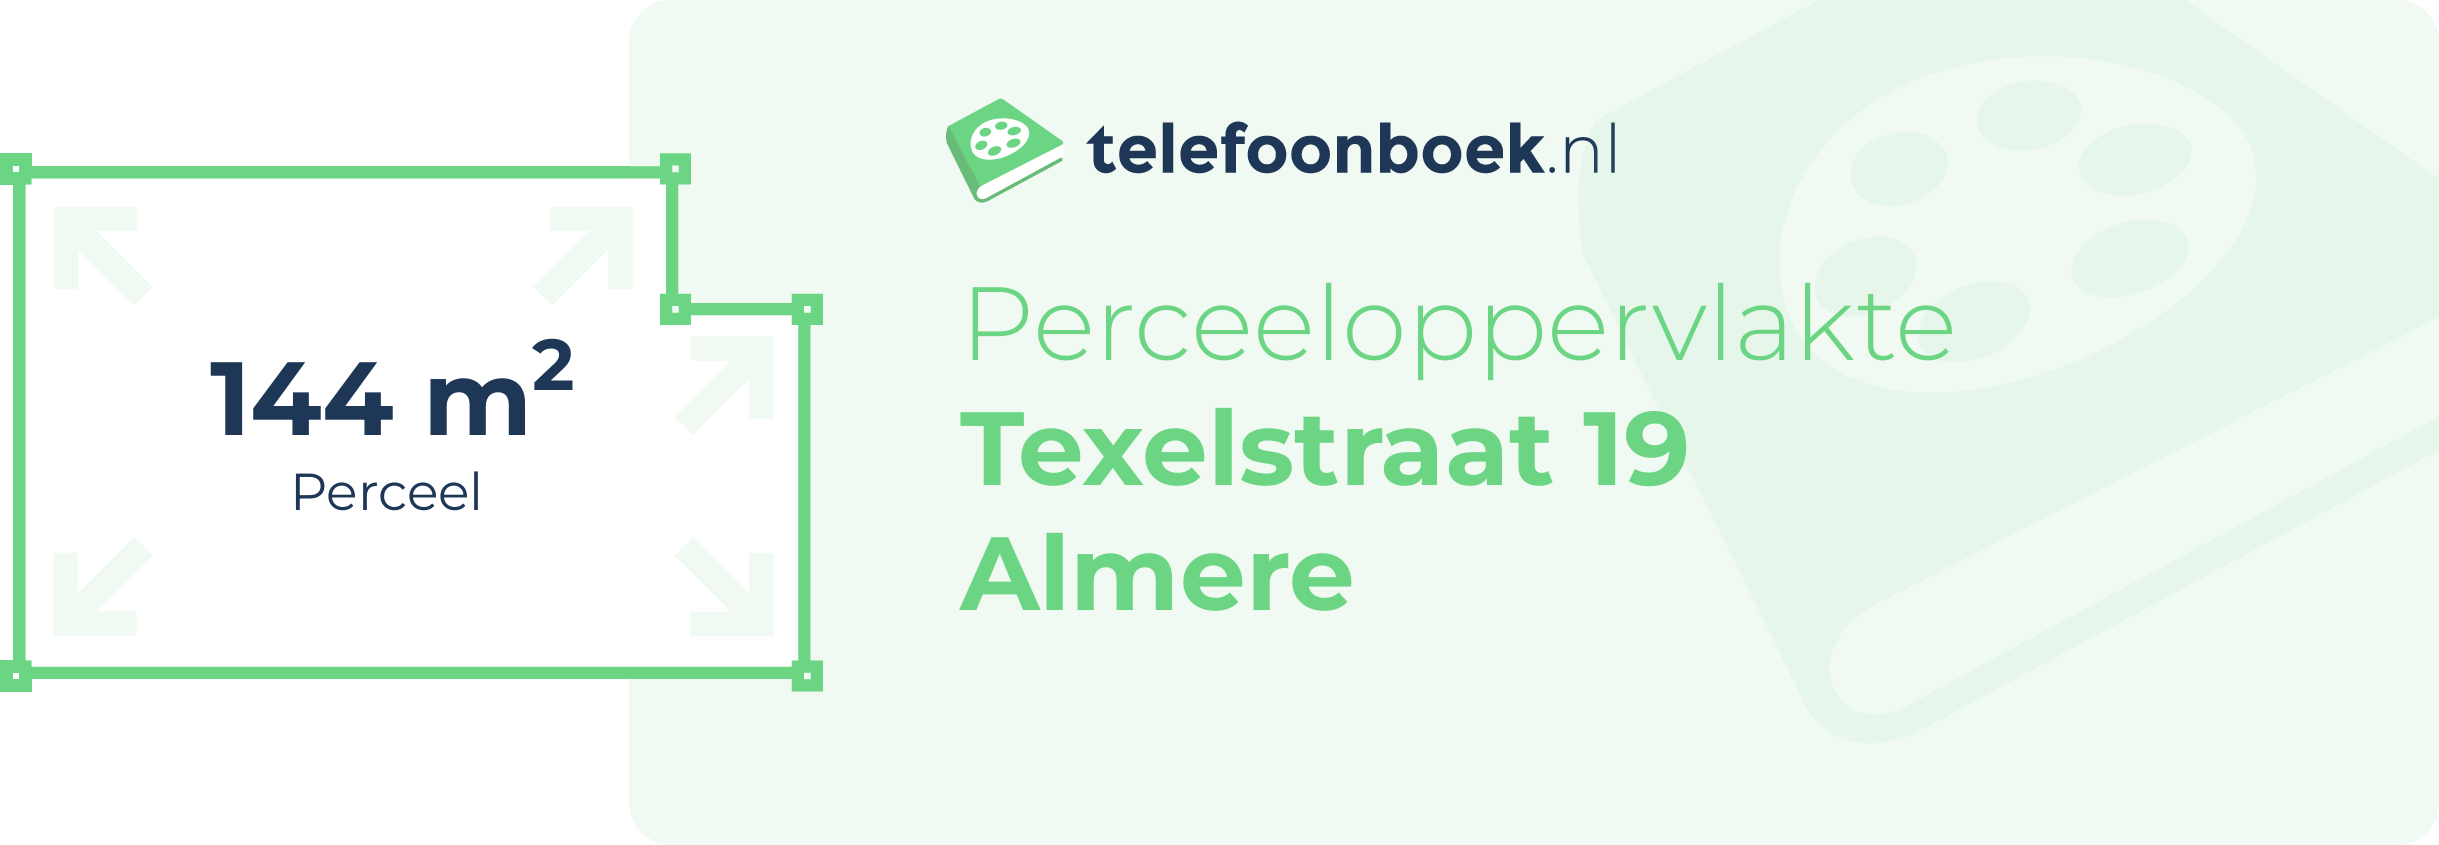 Perceeloppervlakte Texelstraat 19 Almere